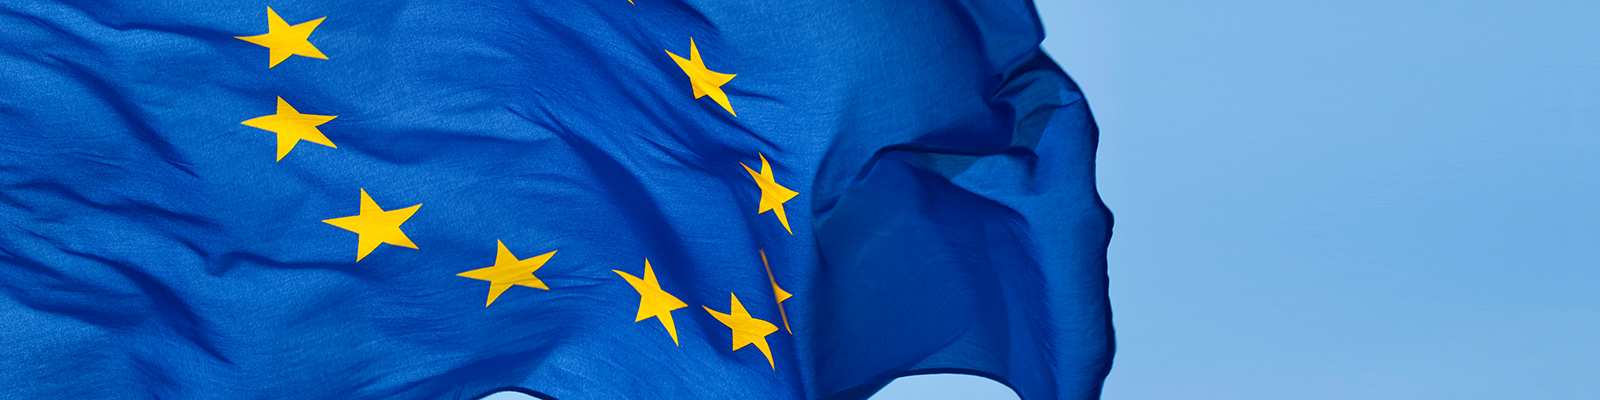 EU-Flagge zum Infotainment zu Europa